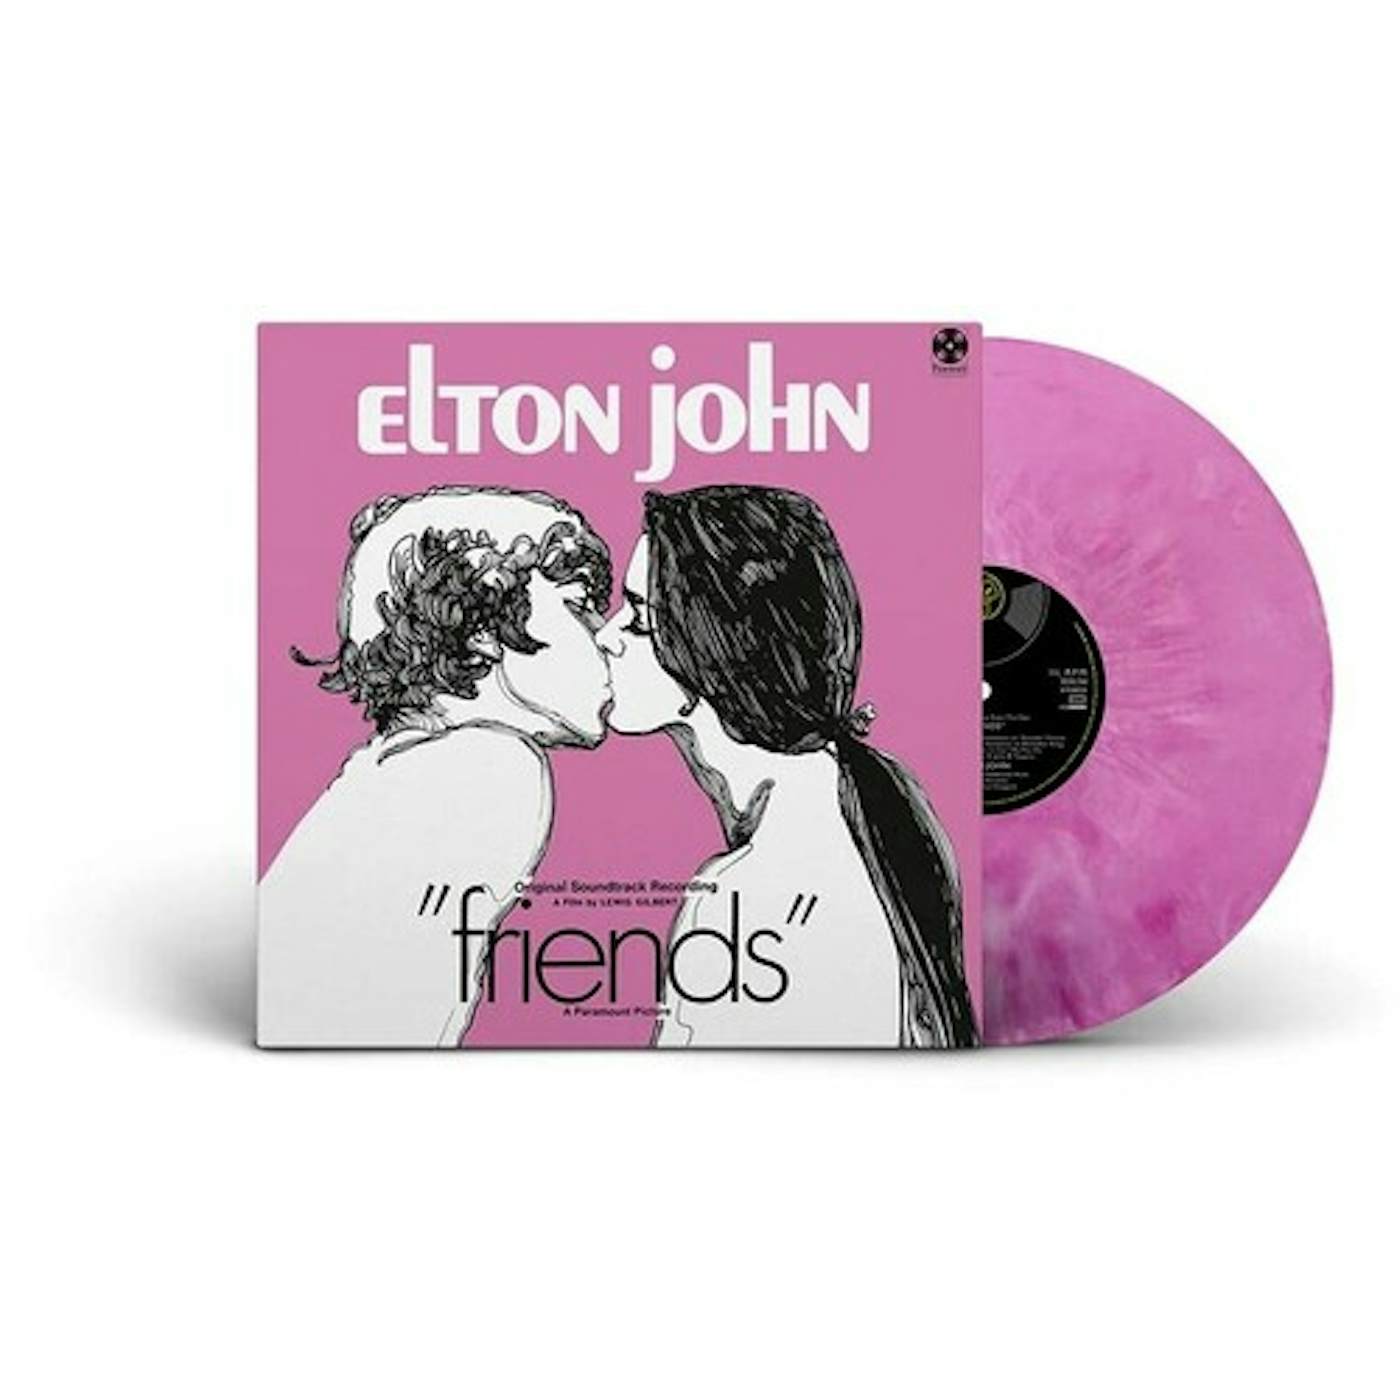 ELTON JOHN & FRIENDS Vinyl Record